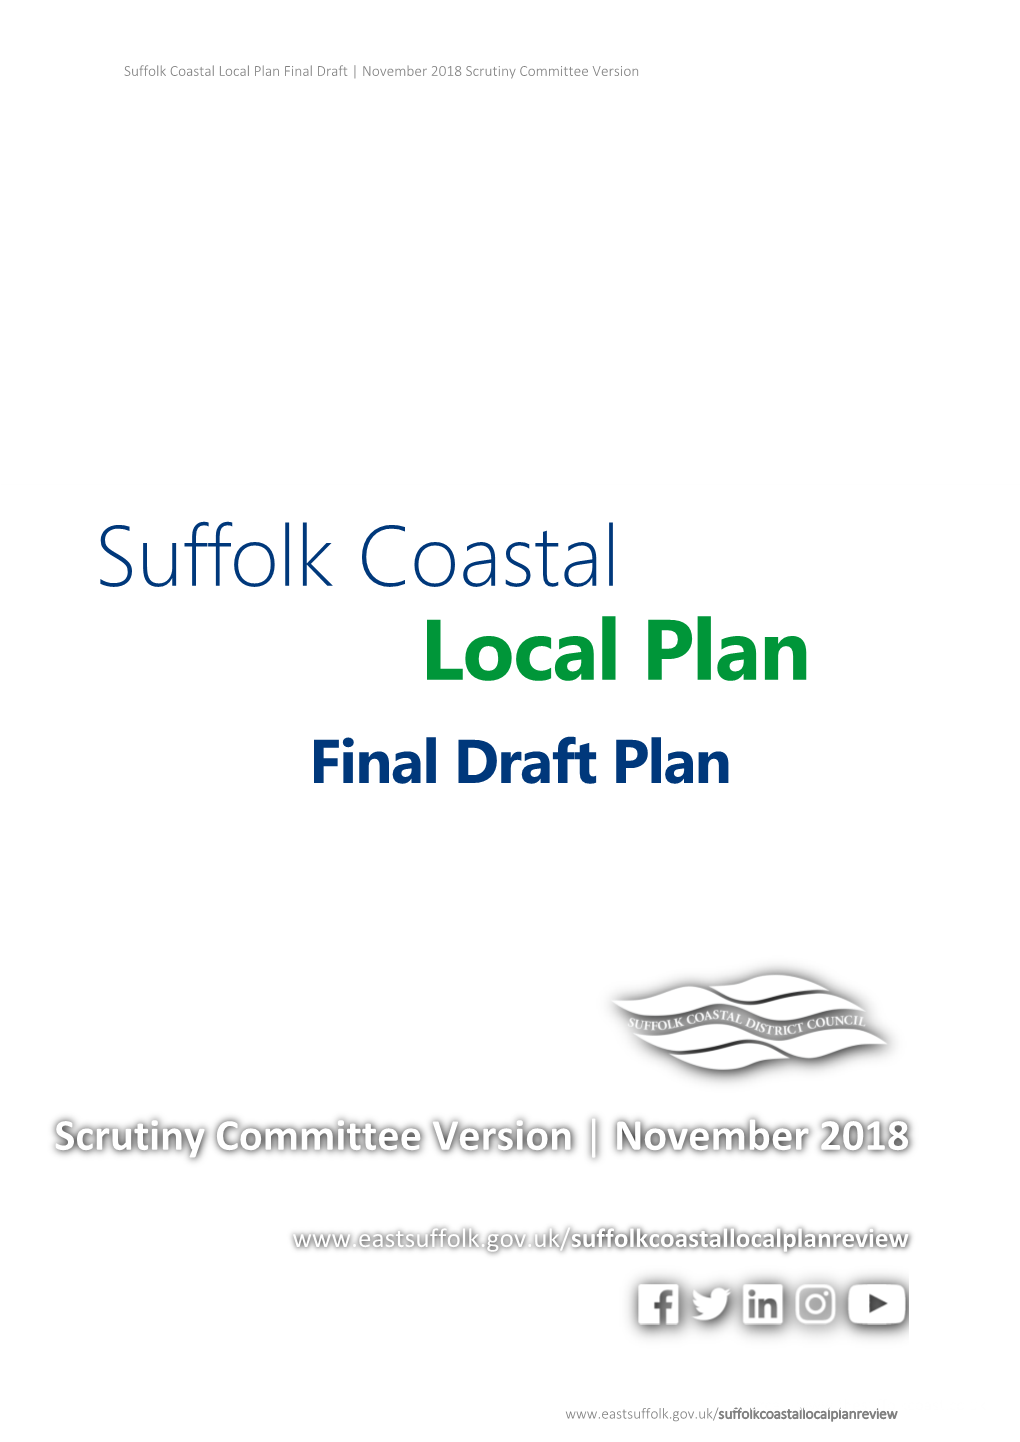 Suffolk Coastal Local Plan Final Draft | November 2018 Scrutiny Committee Version